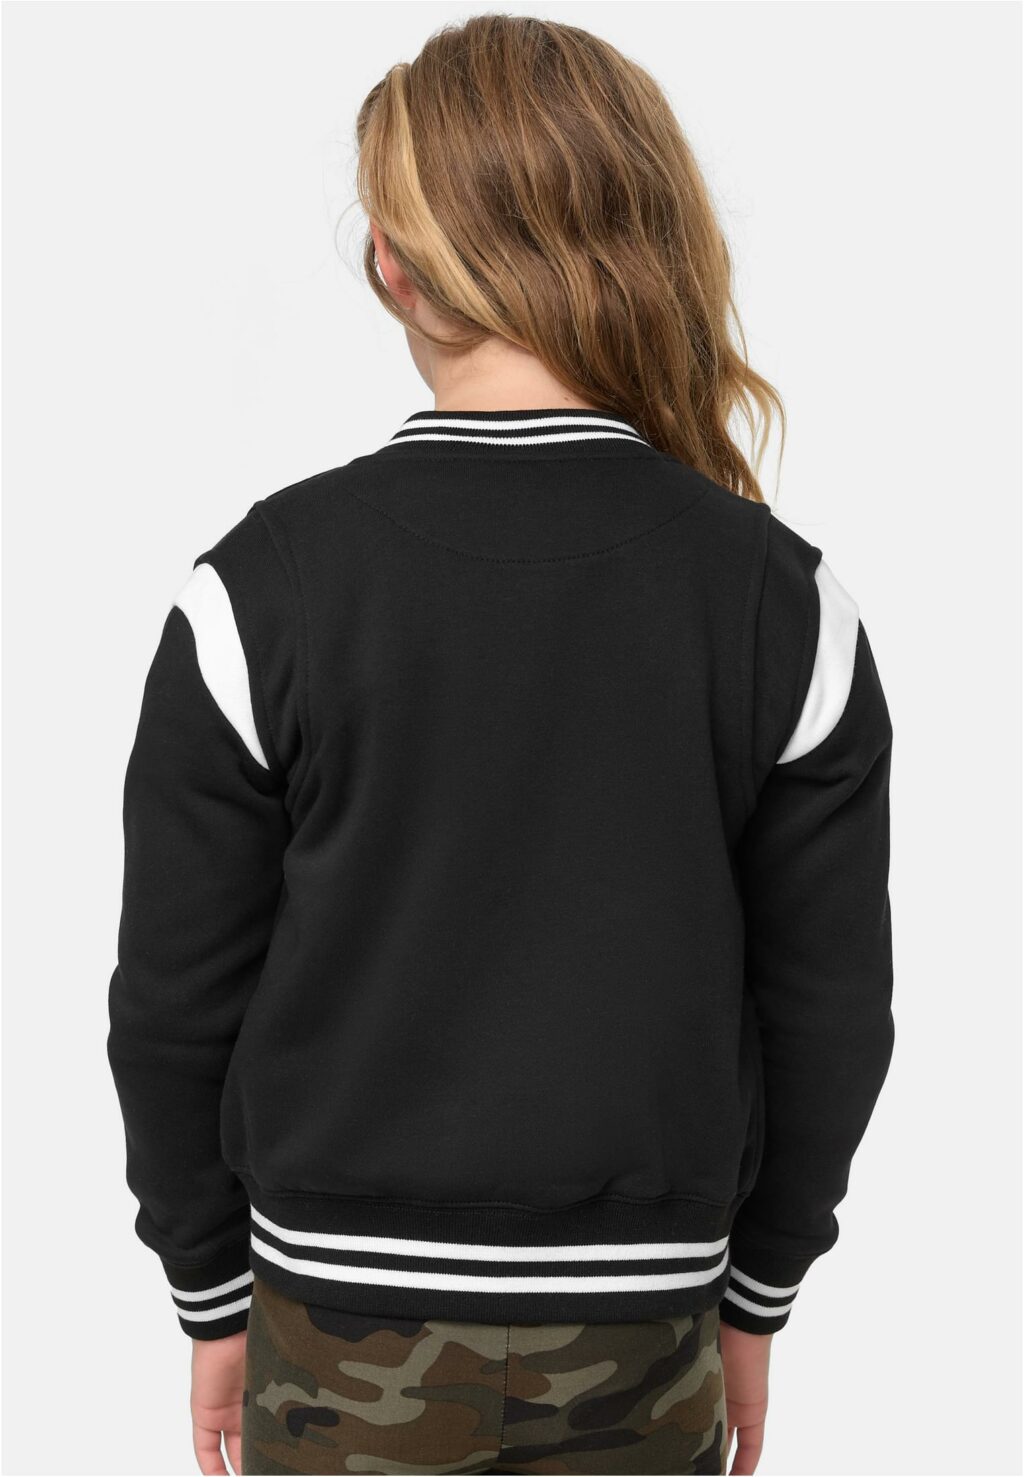 Girls Inset College Sweat Jacket black/white UCK2618